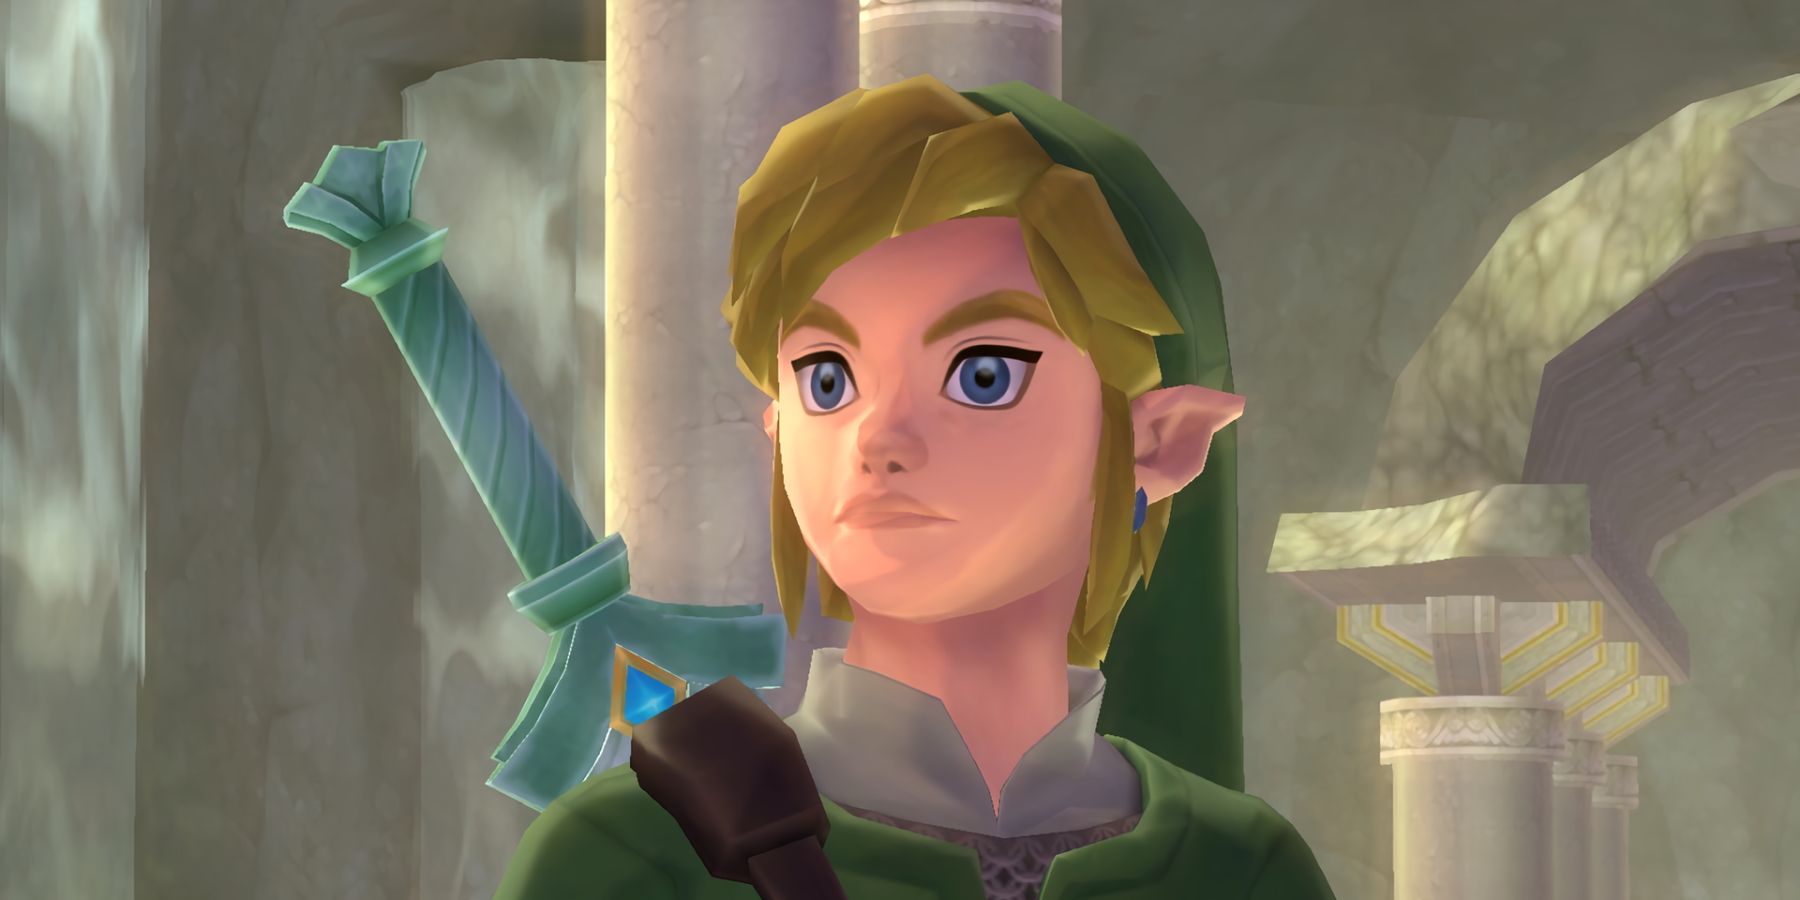 A screenshot of Link from The Legend of Zelda: Skyward Sword.